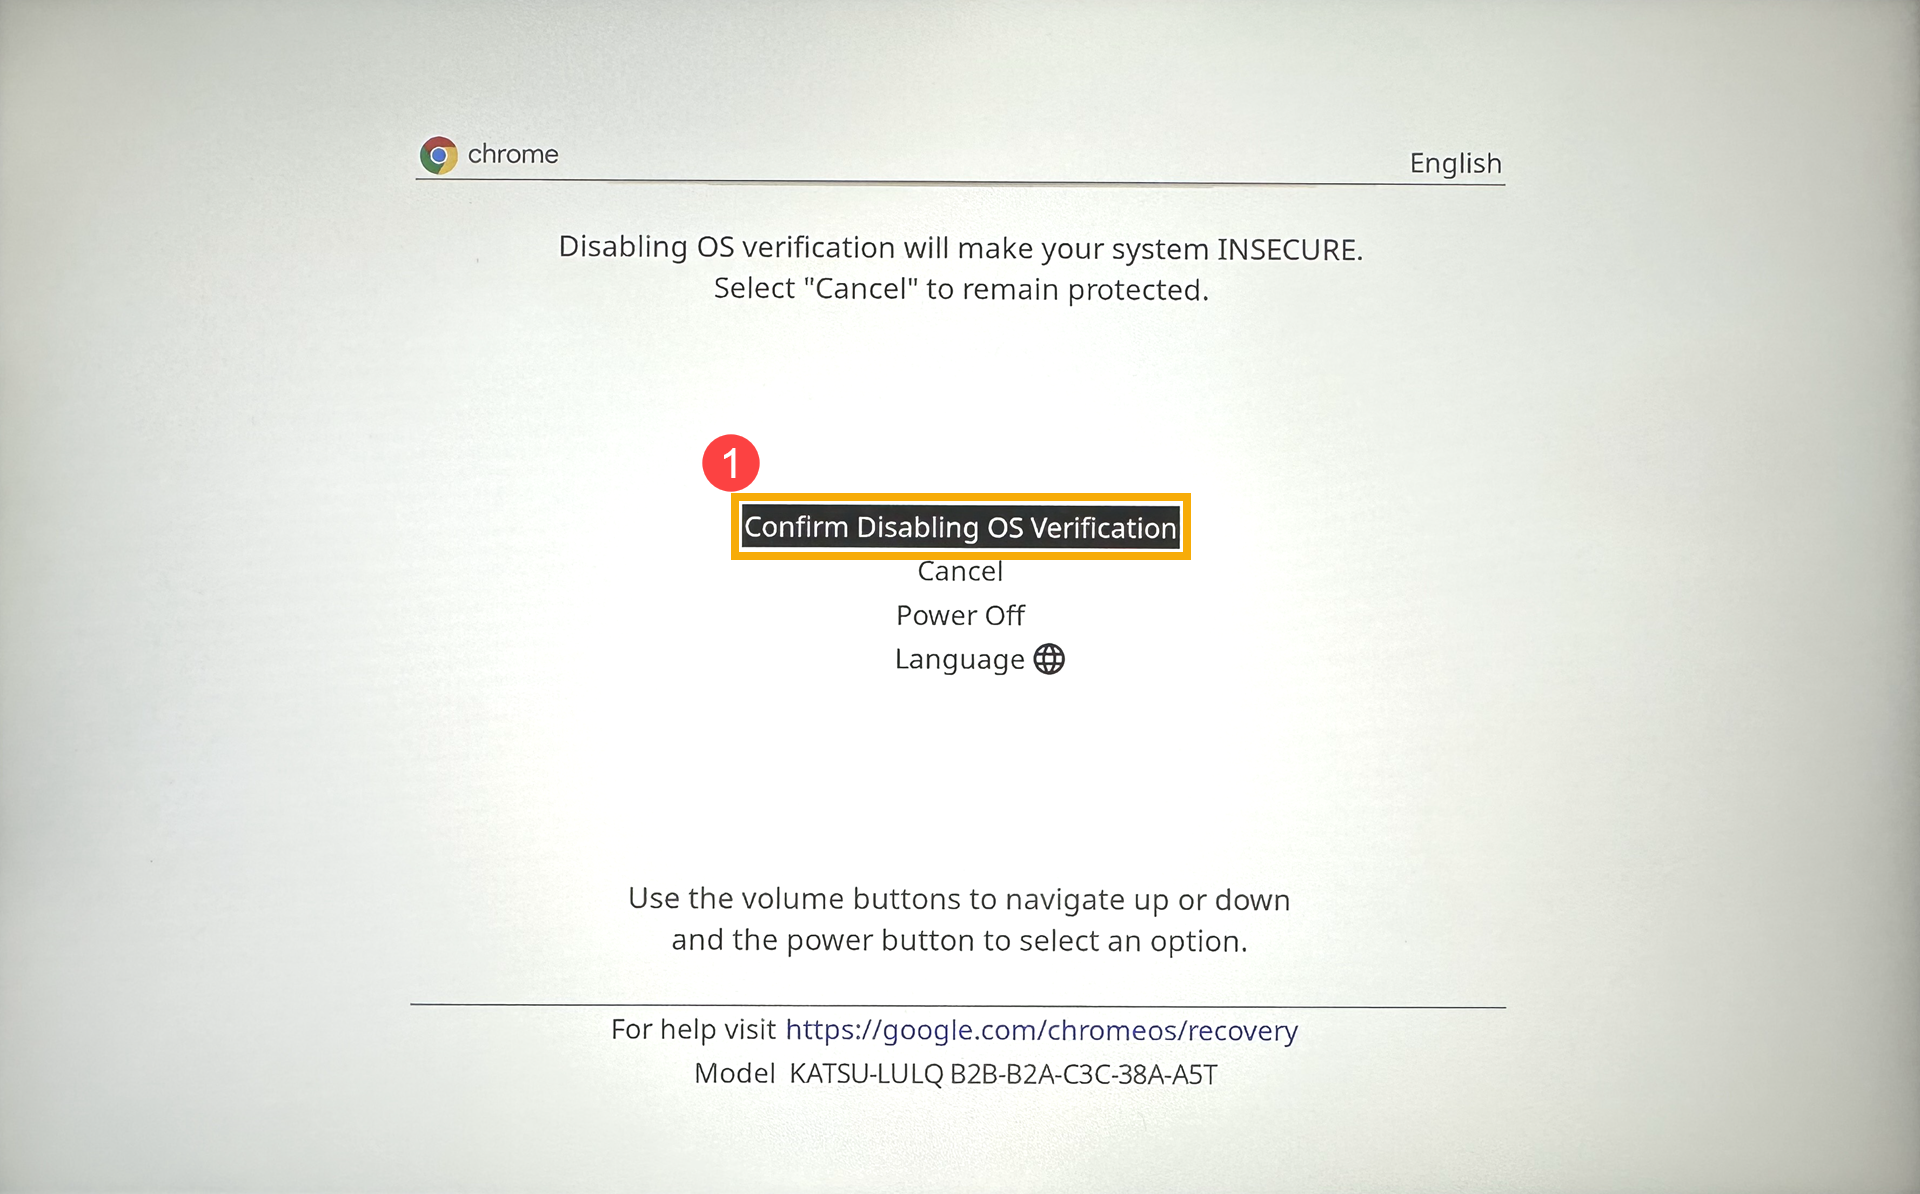 Confirm Disabling OS Verification